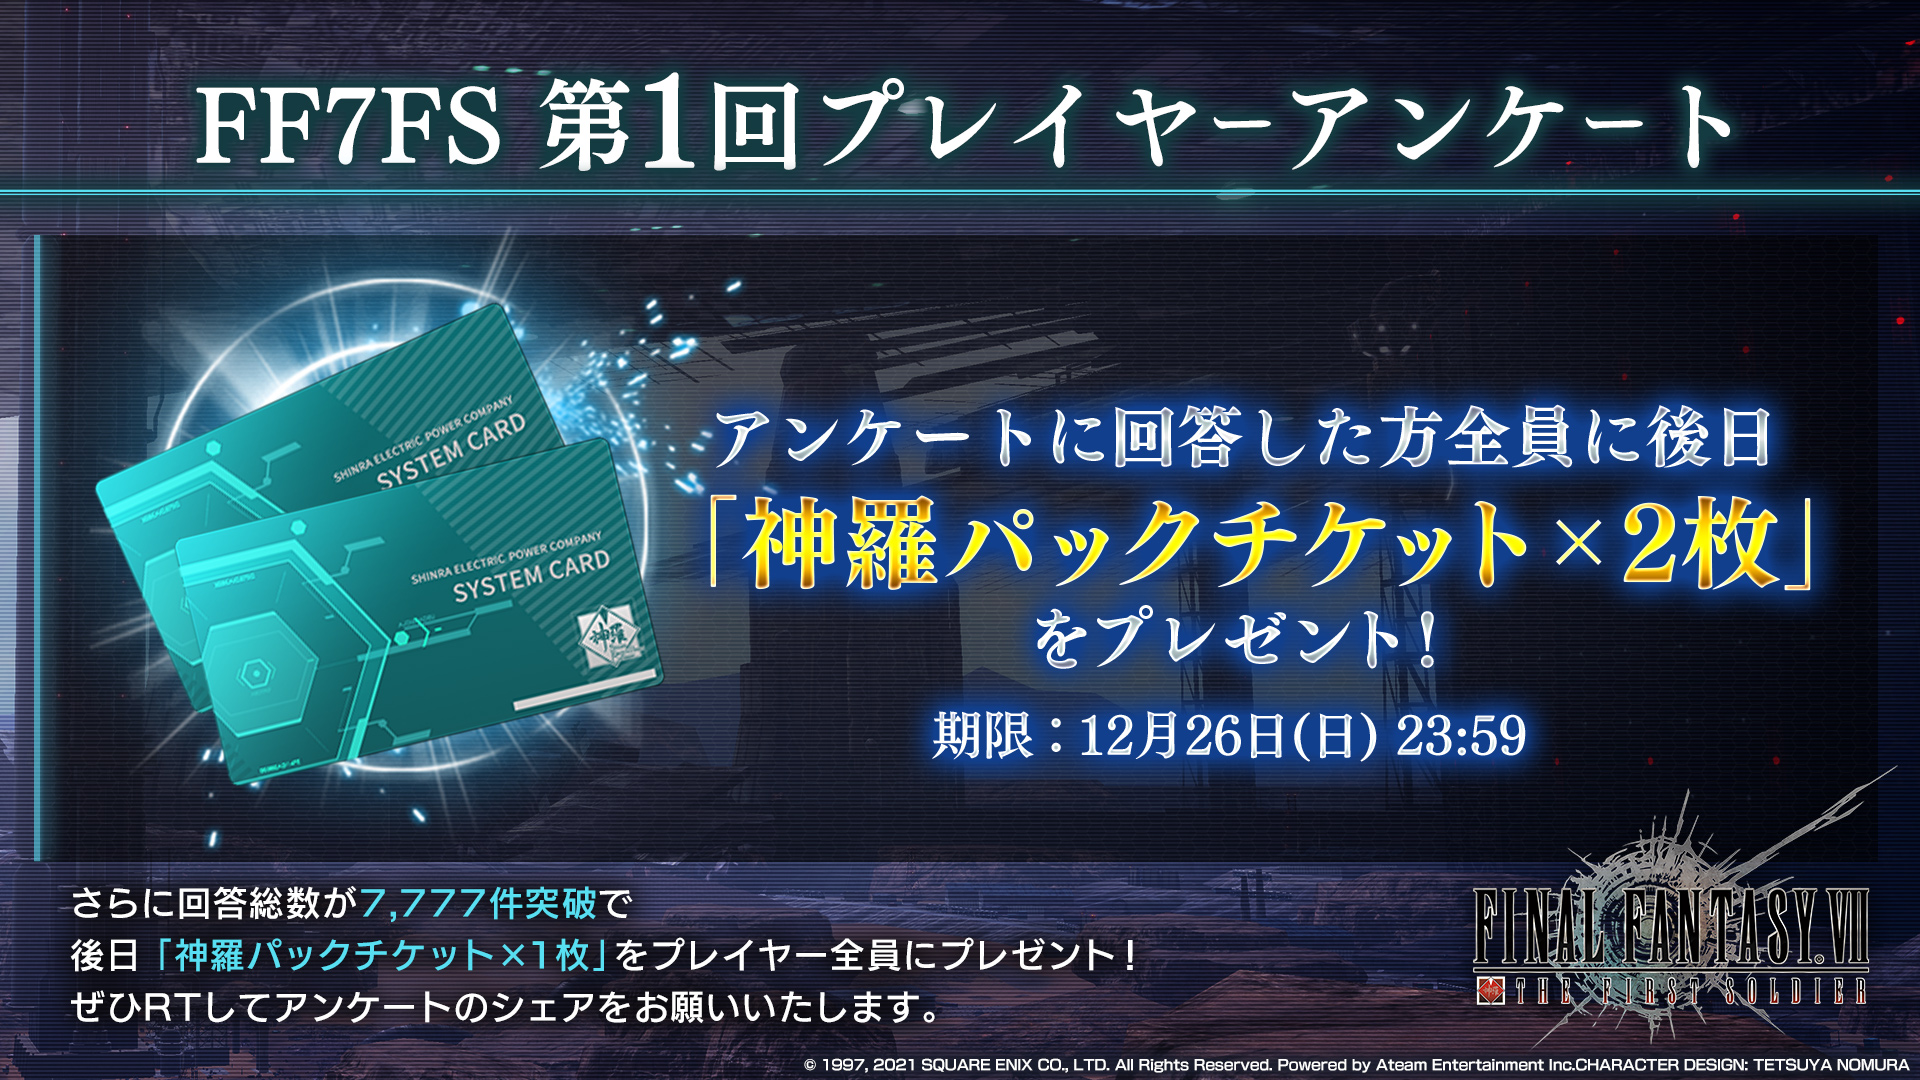 Final Fantasy Vii The First Soldier Jp Ff7fs 第1回プレイヤーアンケート実施 ご協力いただいたお客様に 神羅パックチケット 2枚 を後日プレゼント さらに 回答総数が7 777件突破で 神羅パックチケット 1枚 をプレイヤー全員にプレゼント